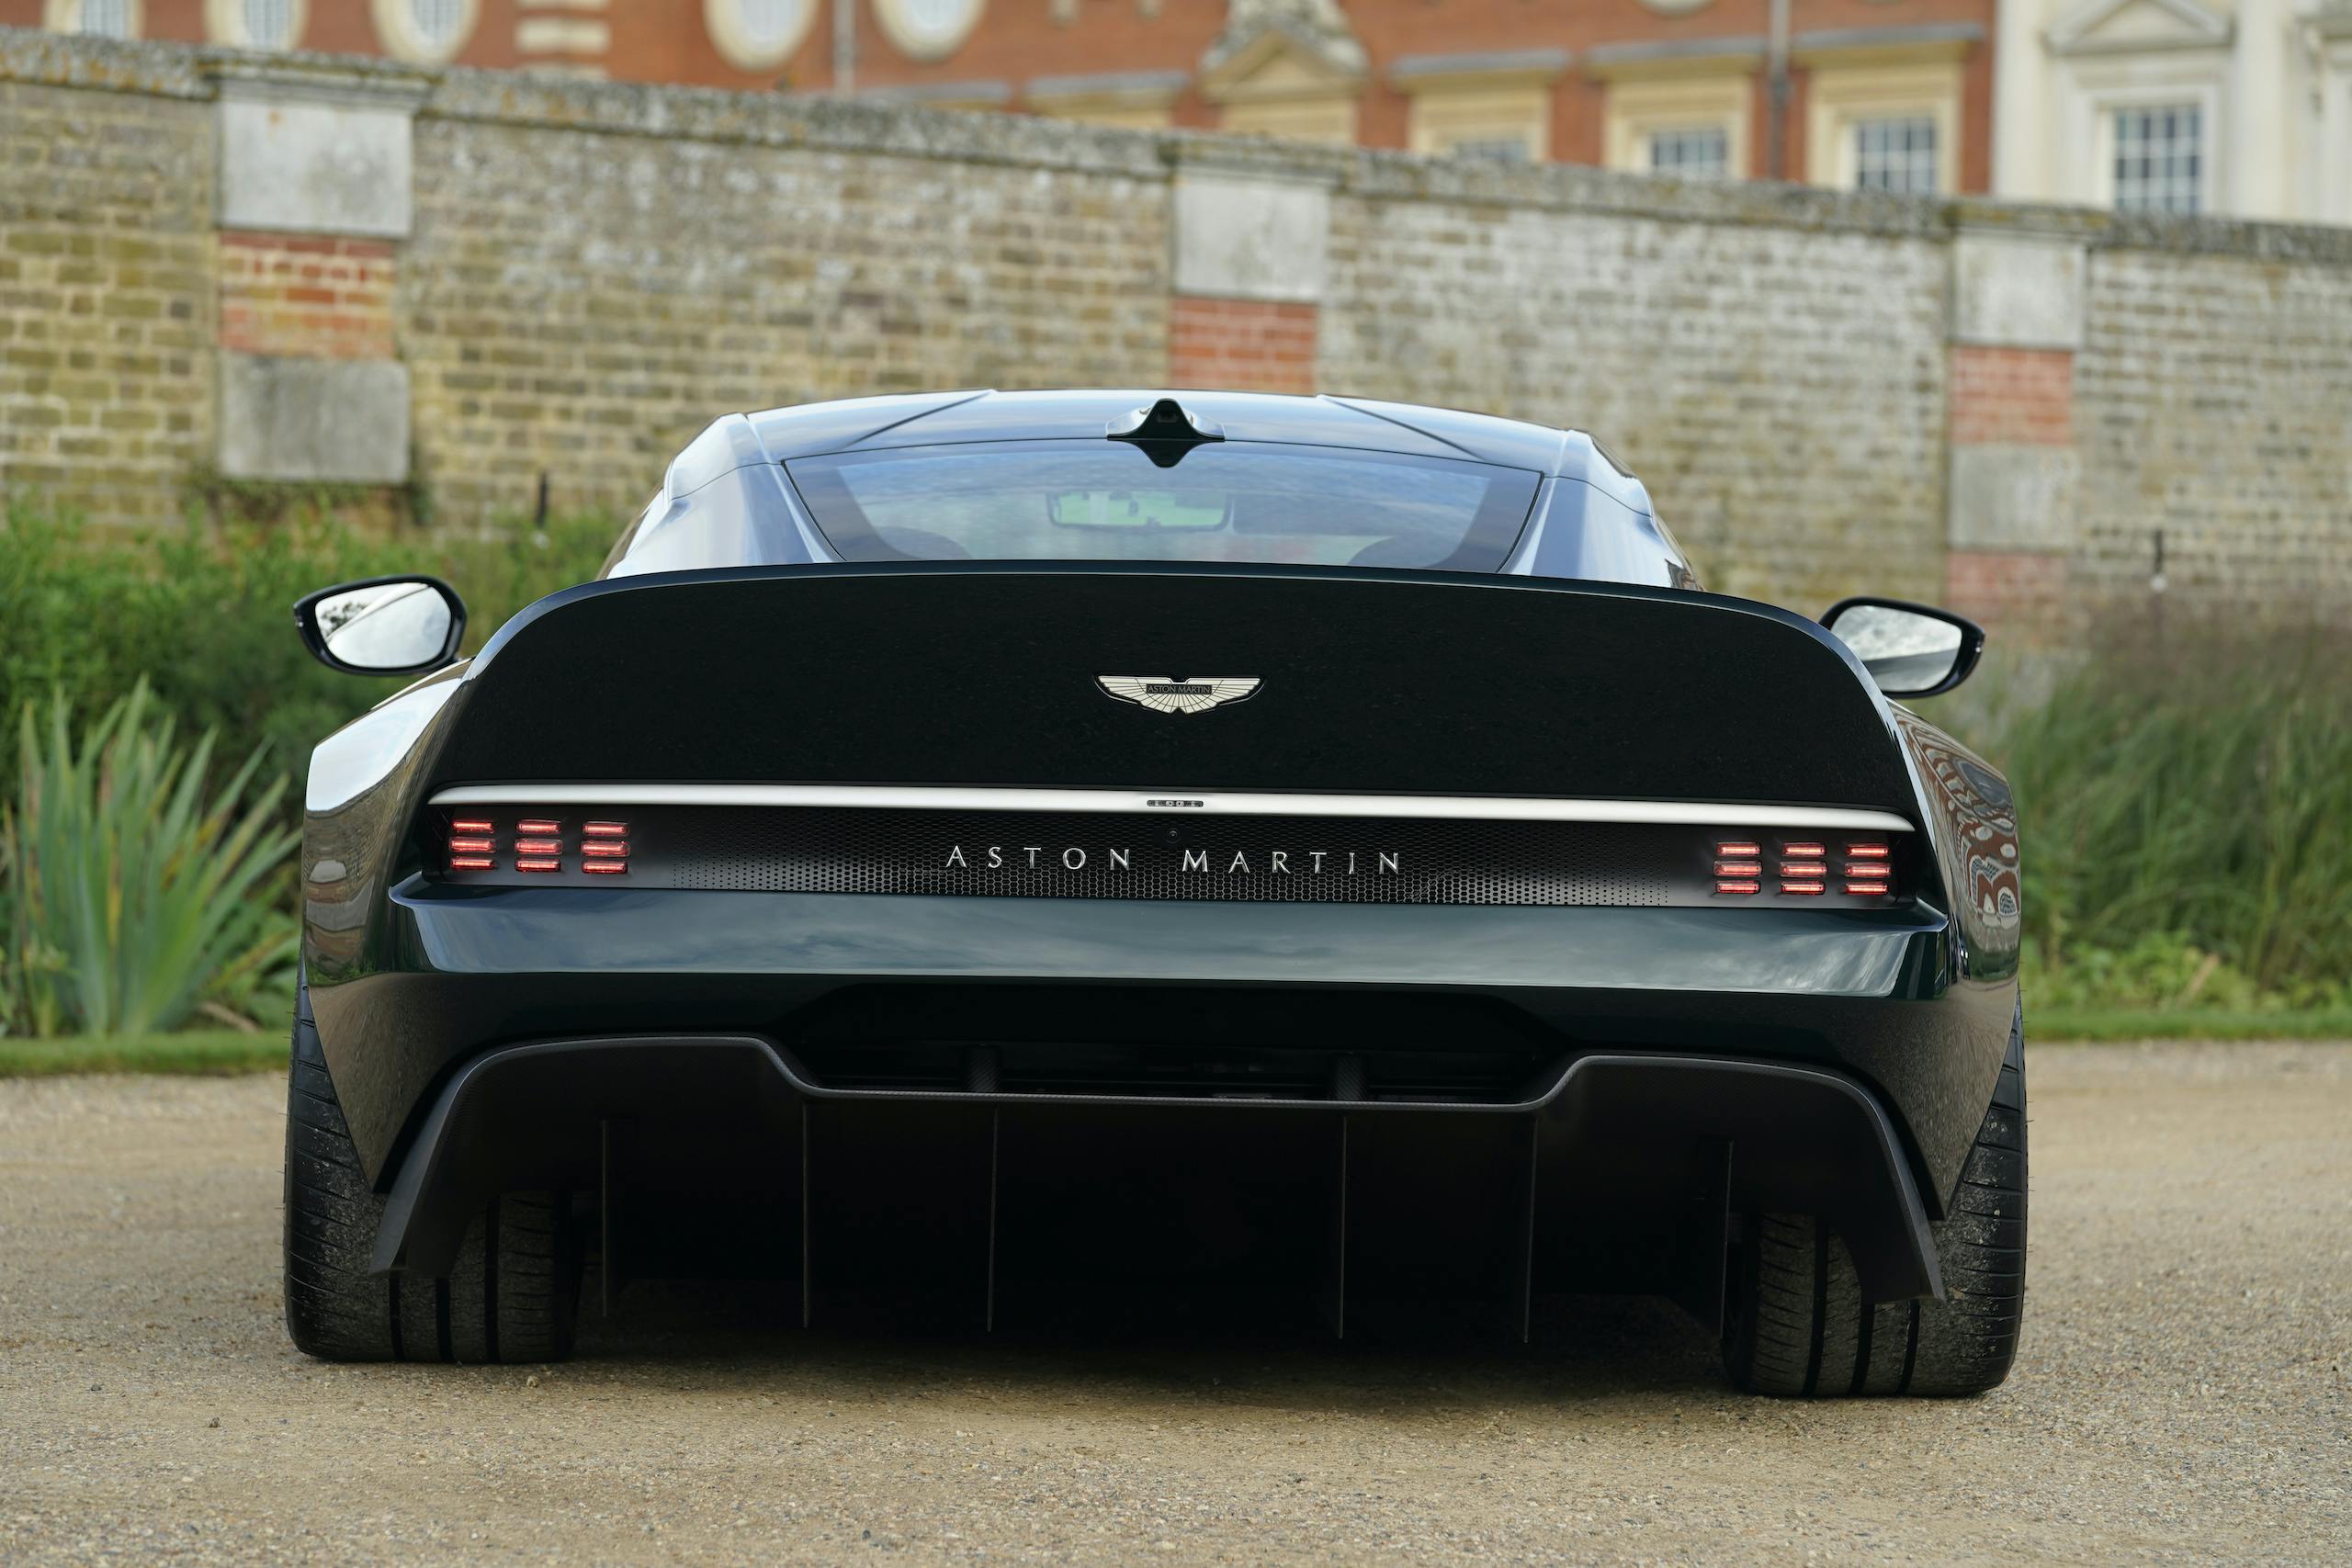 Aston Martin Victor rear close